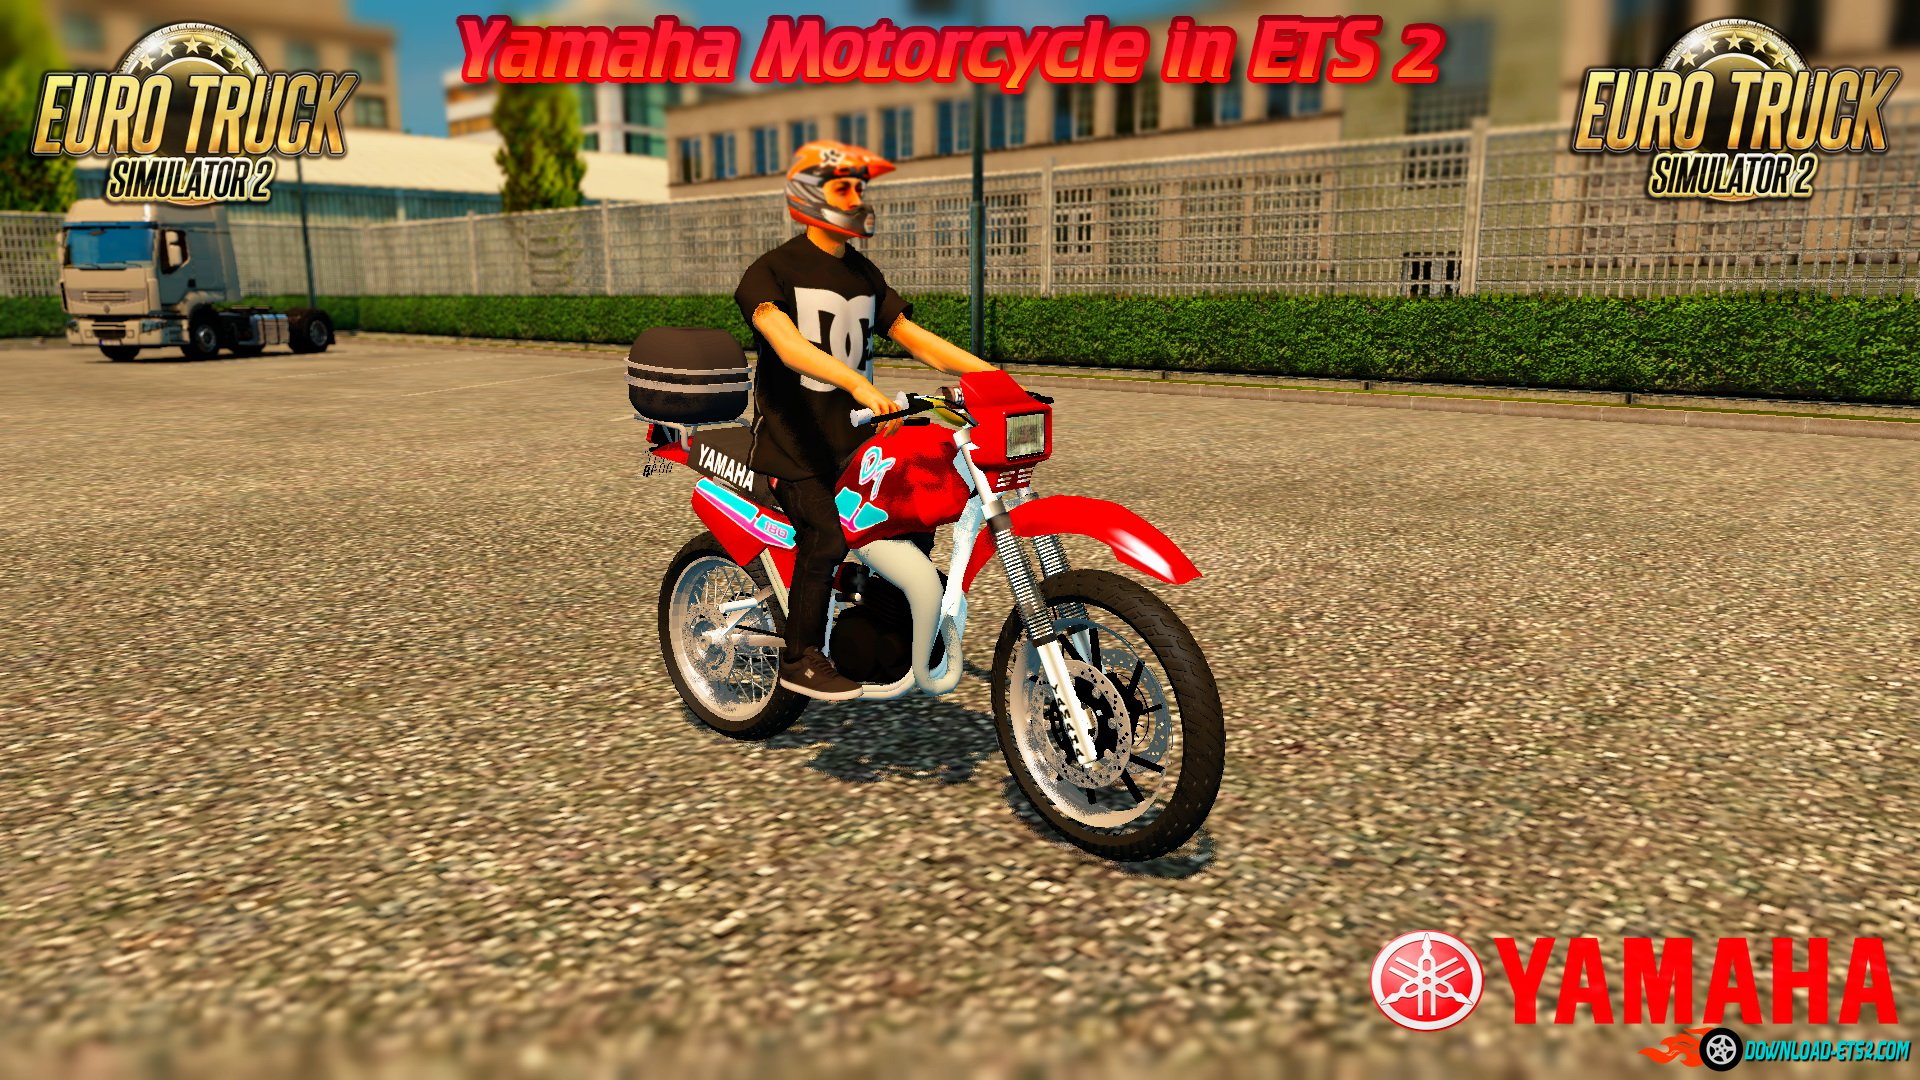 Yamaha Motorcycle in ETS 2 (Euro Truck Simulator 2)